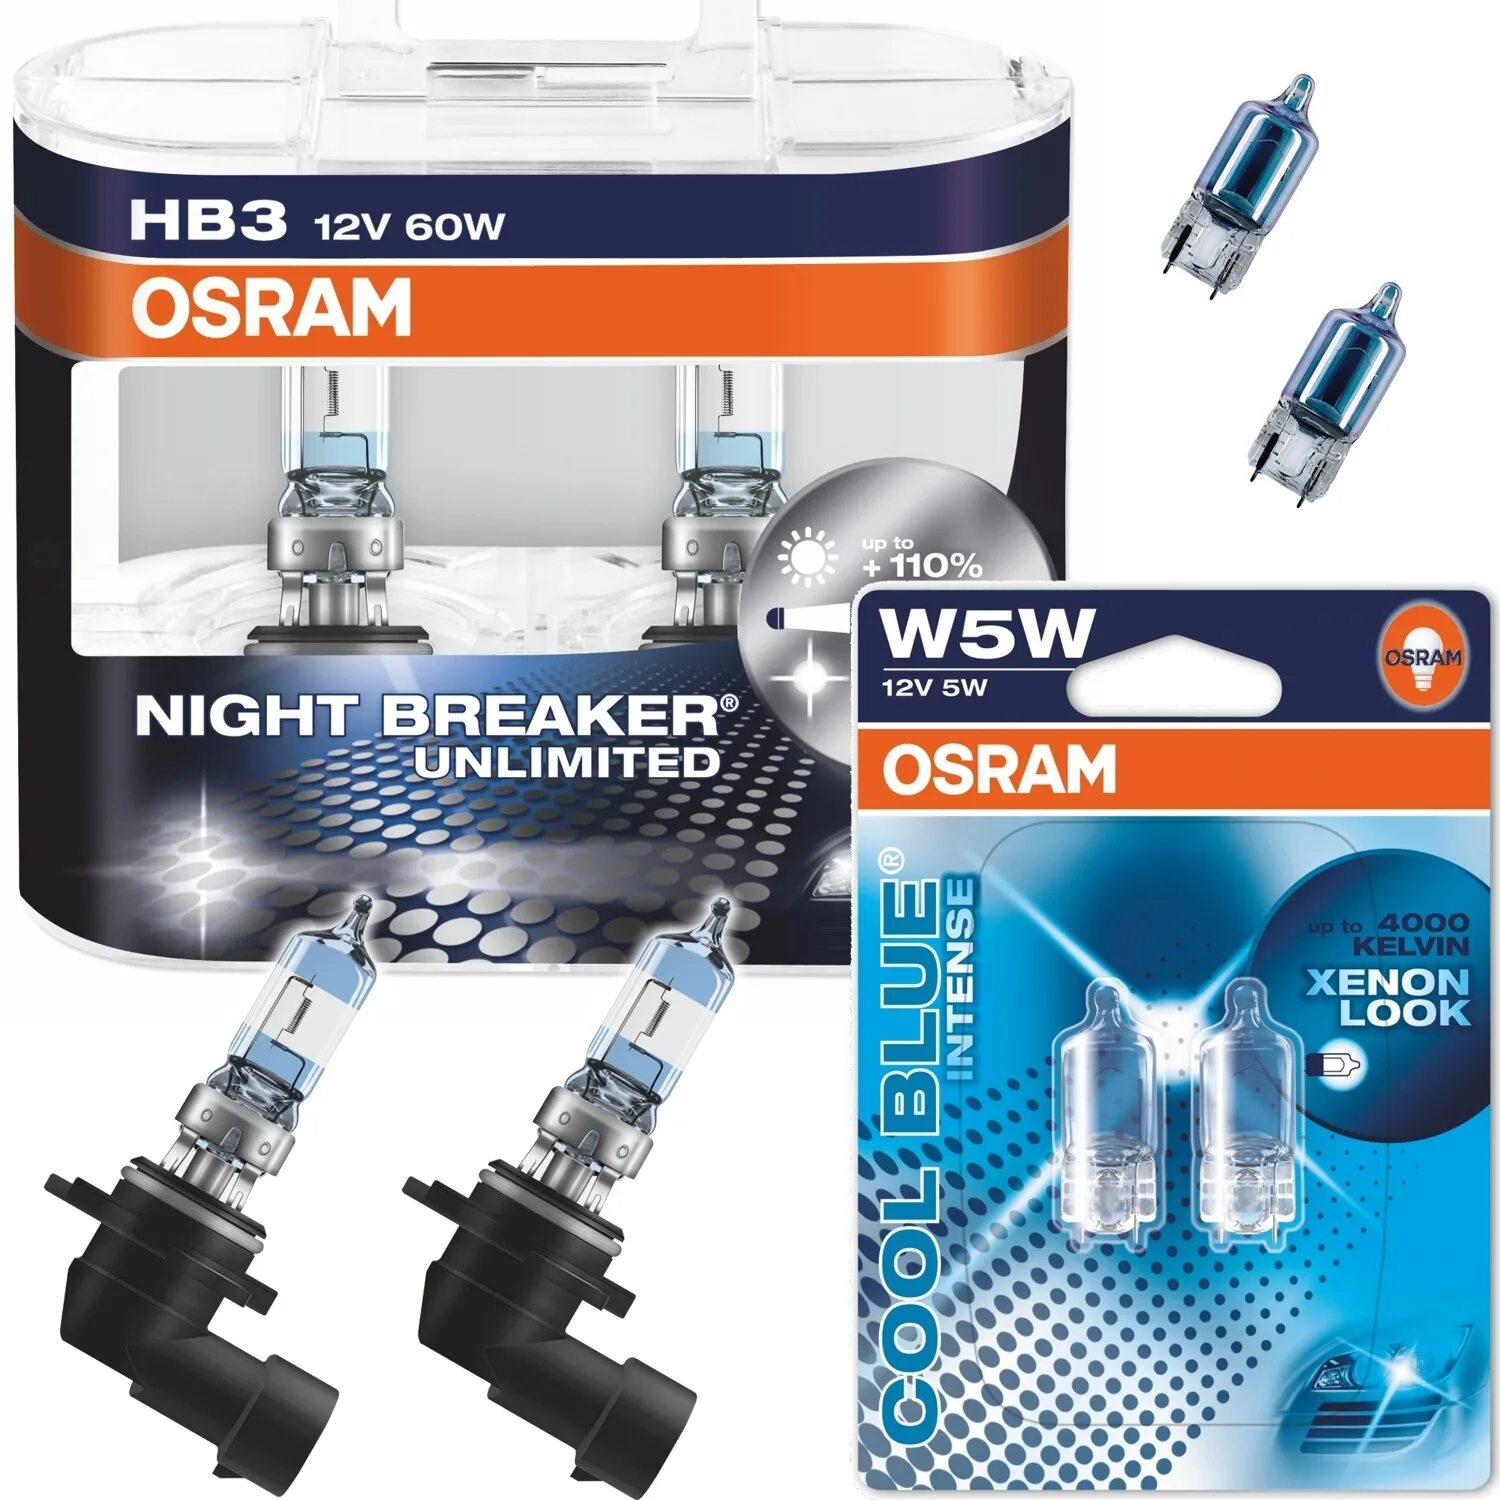 Osram Night Breaker Unlimited hb3 артикул. Osram Night Breaker Unlimited hb3. W5w Osram Night Breaker. Osram hb3 12v 60w.